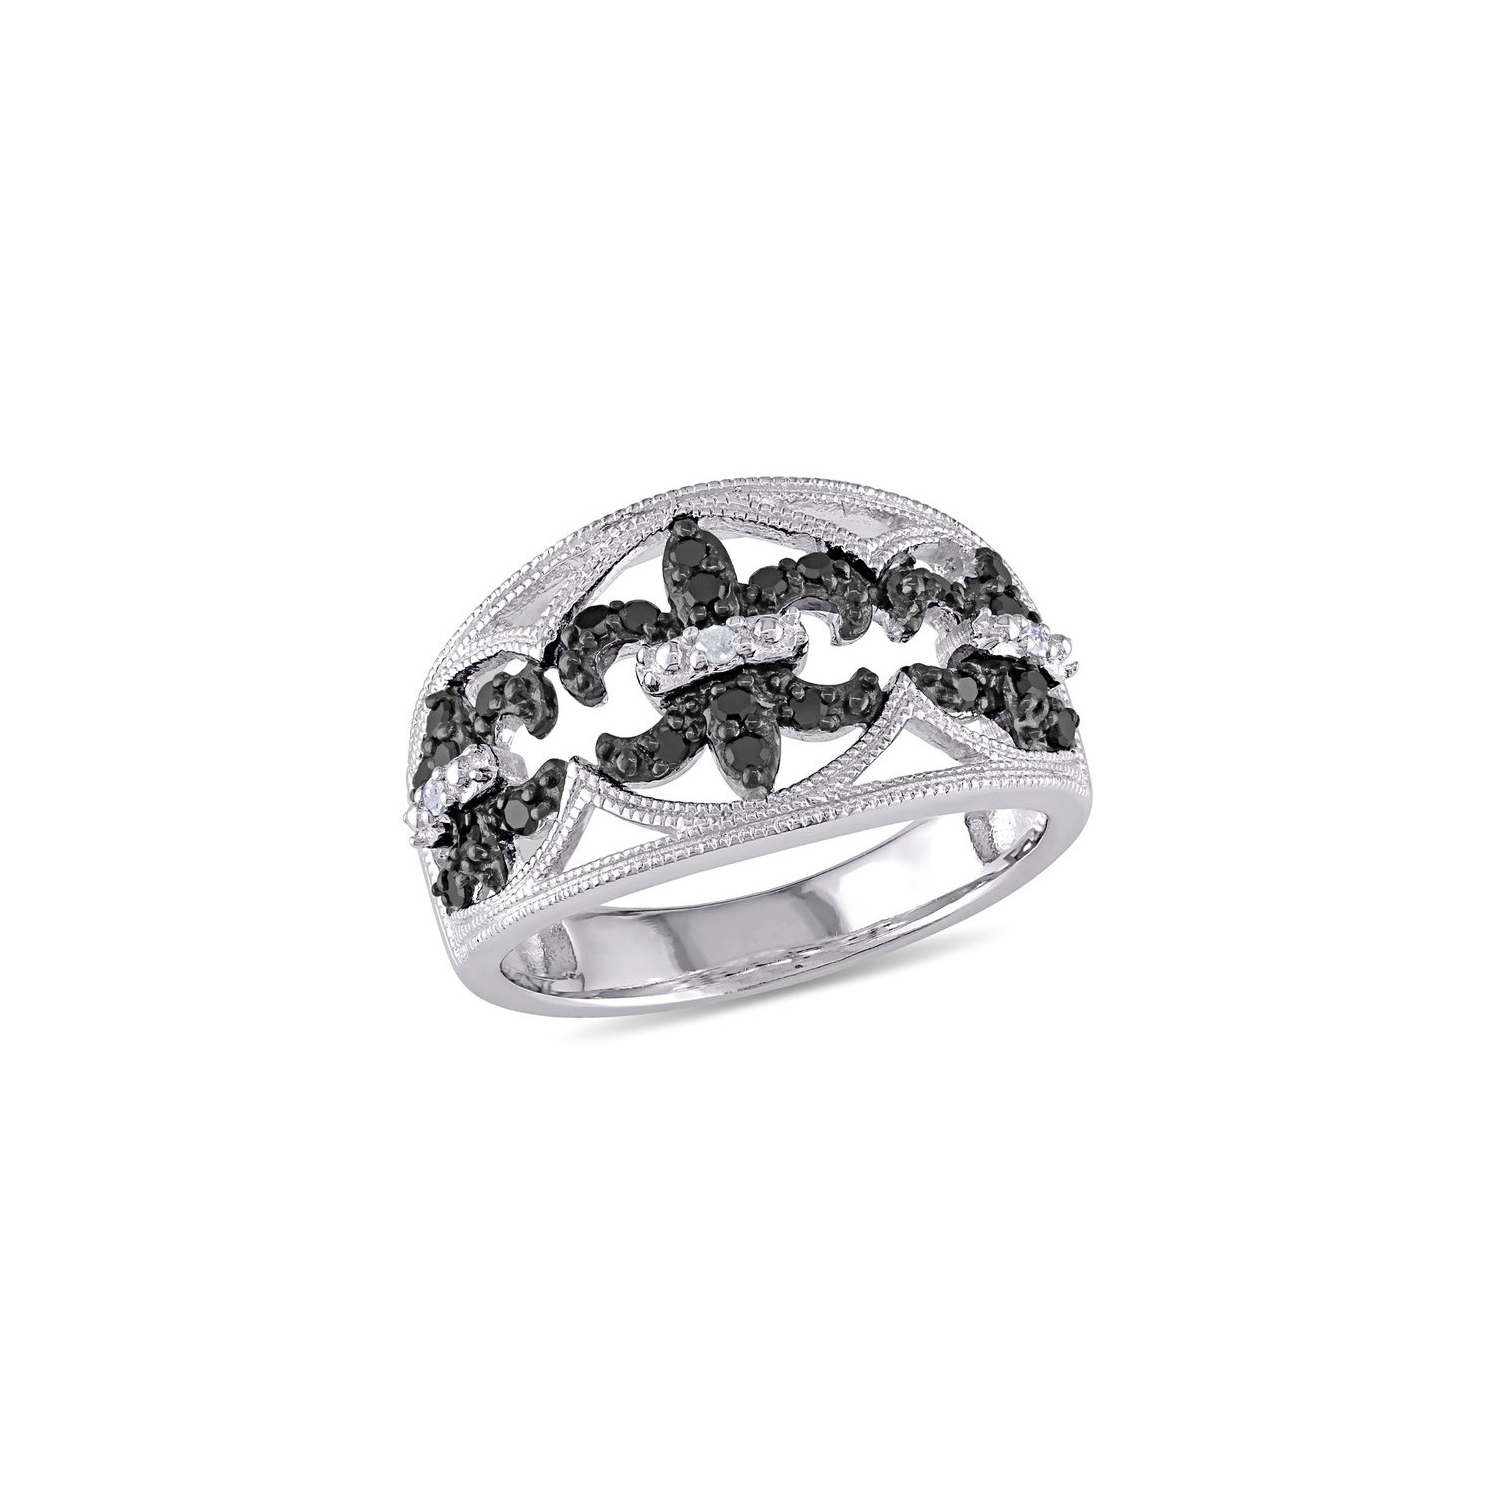 Enhanced Black and White Fleur De Lys Diamond Ring 1/4 Carat ctw in Sterling S 